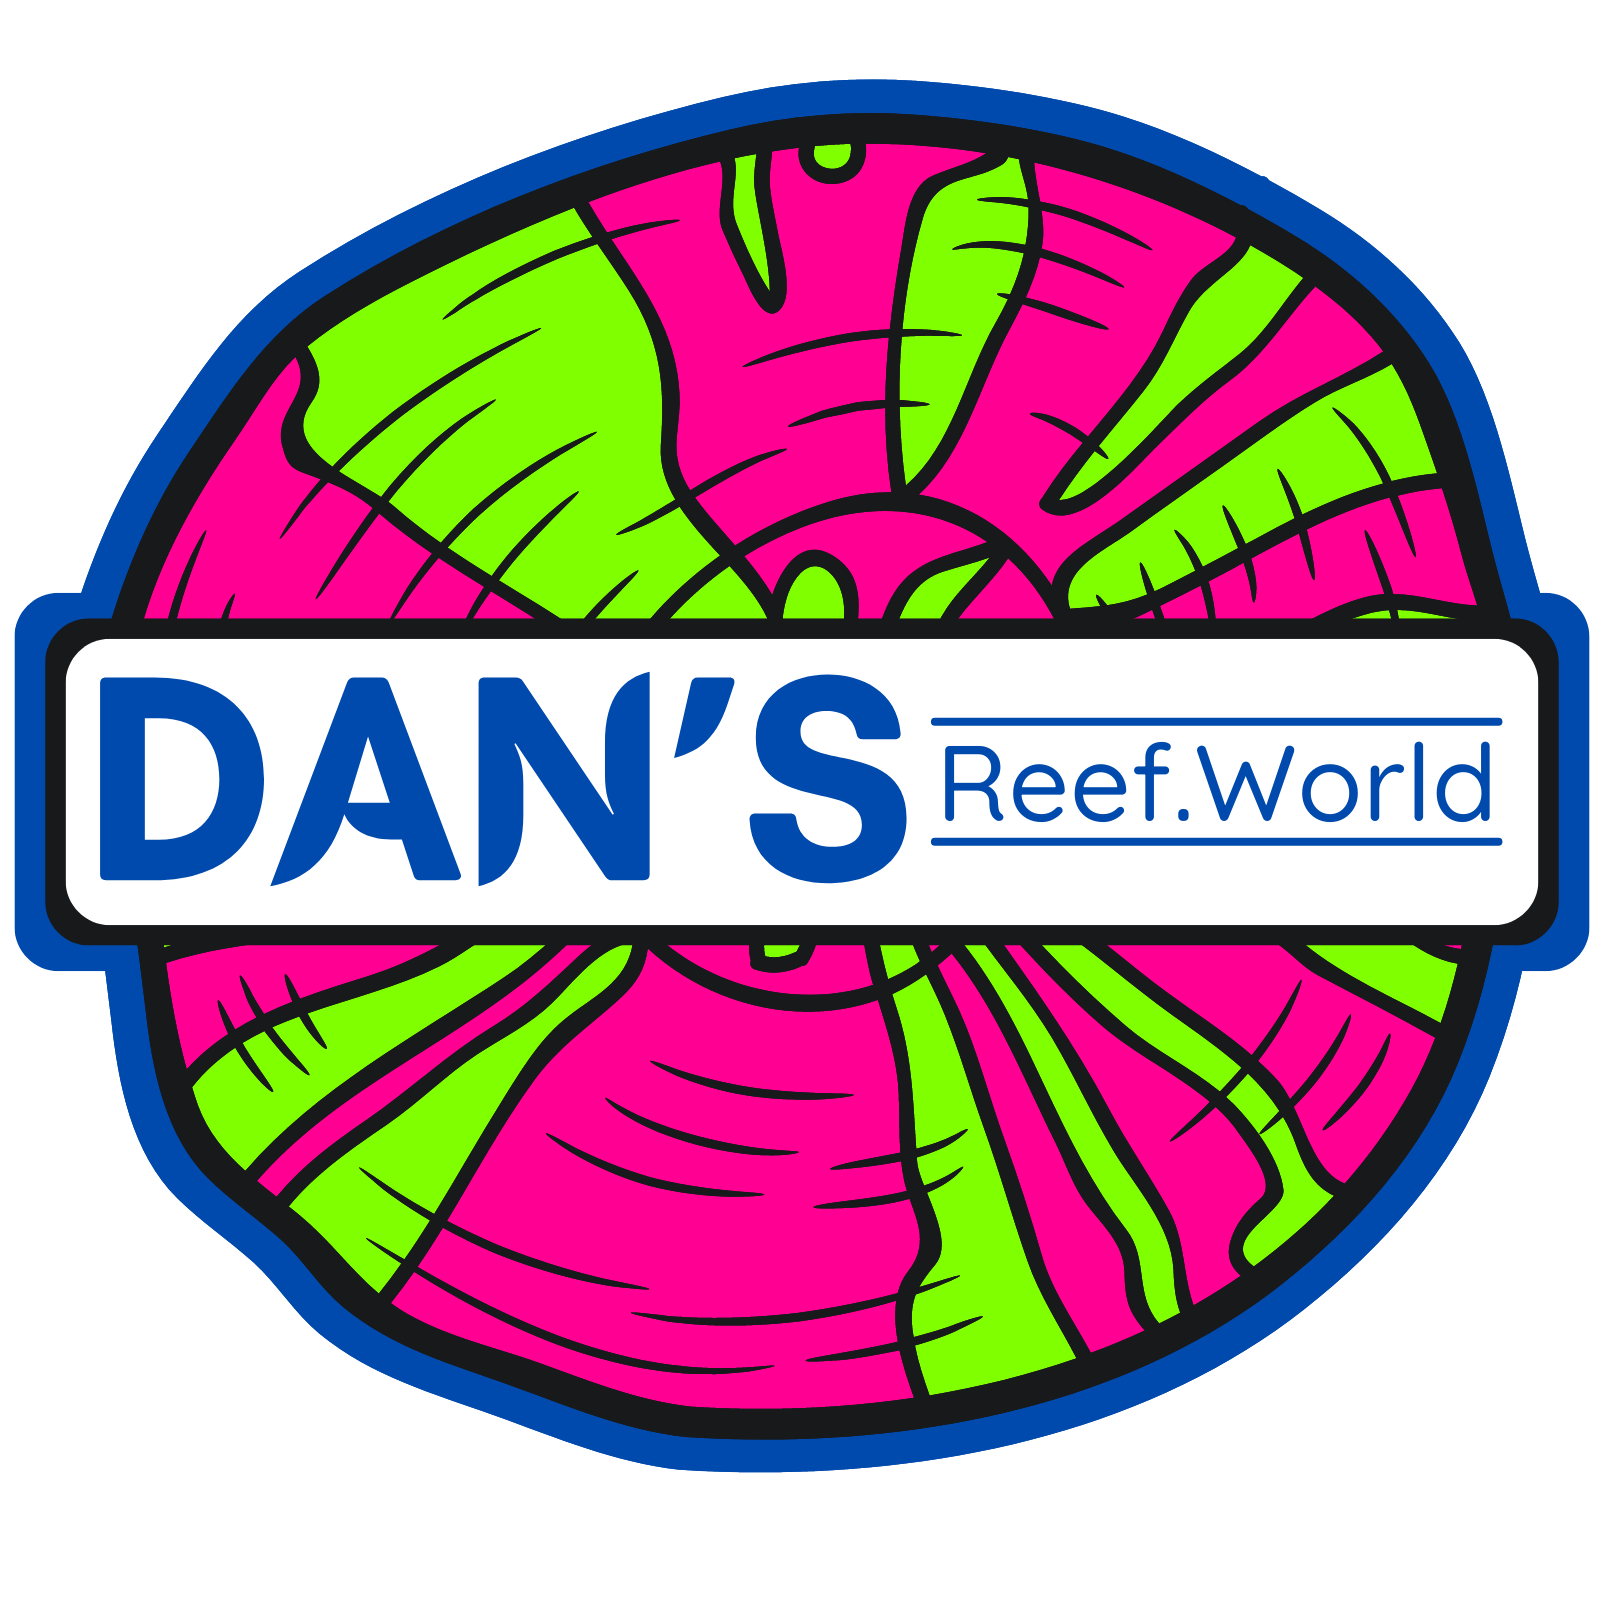 Dan's Reef World